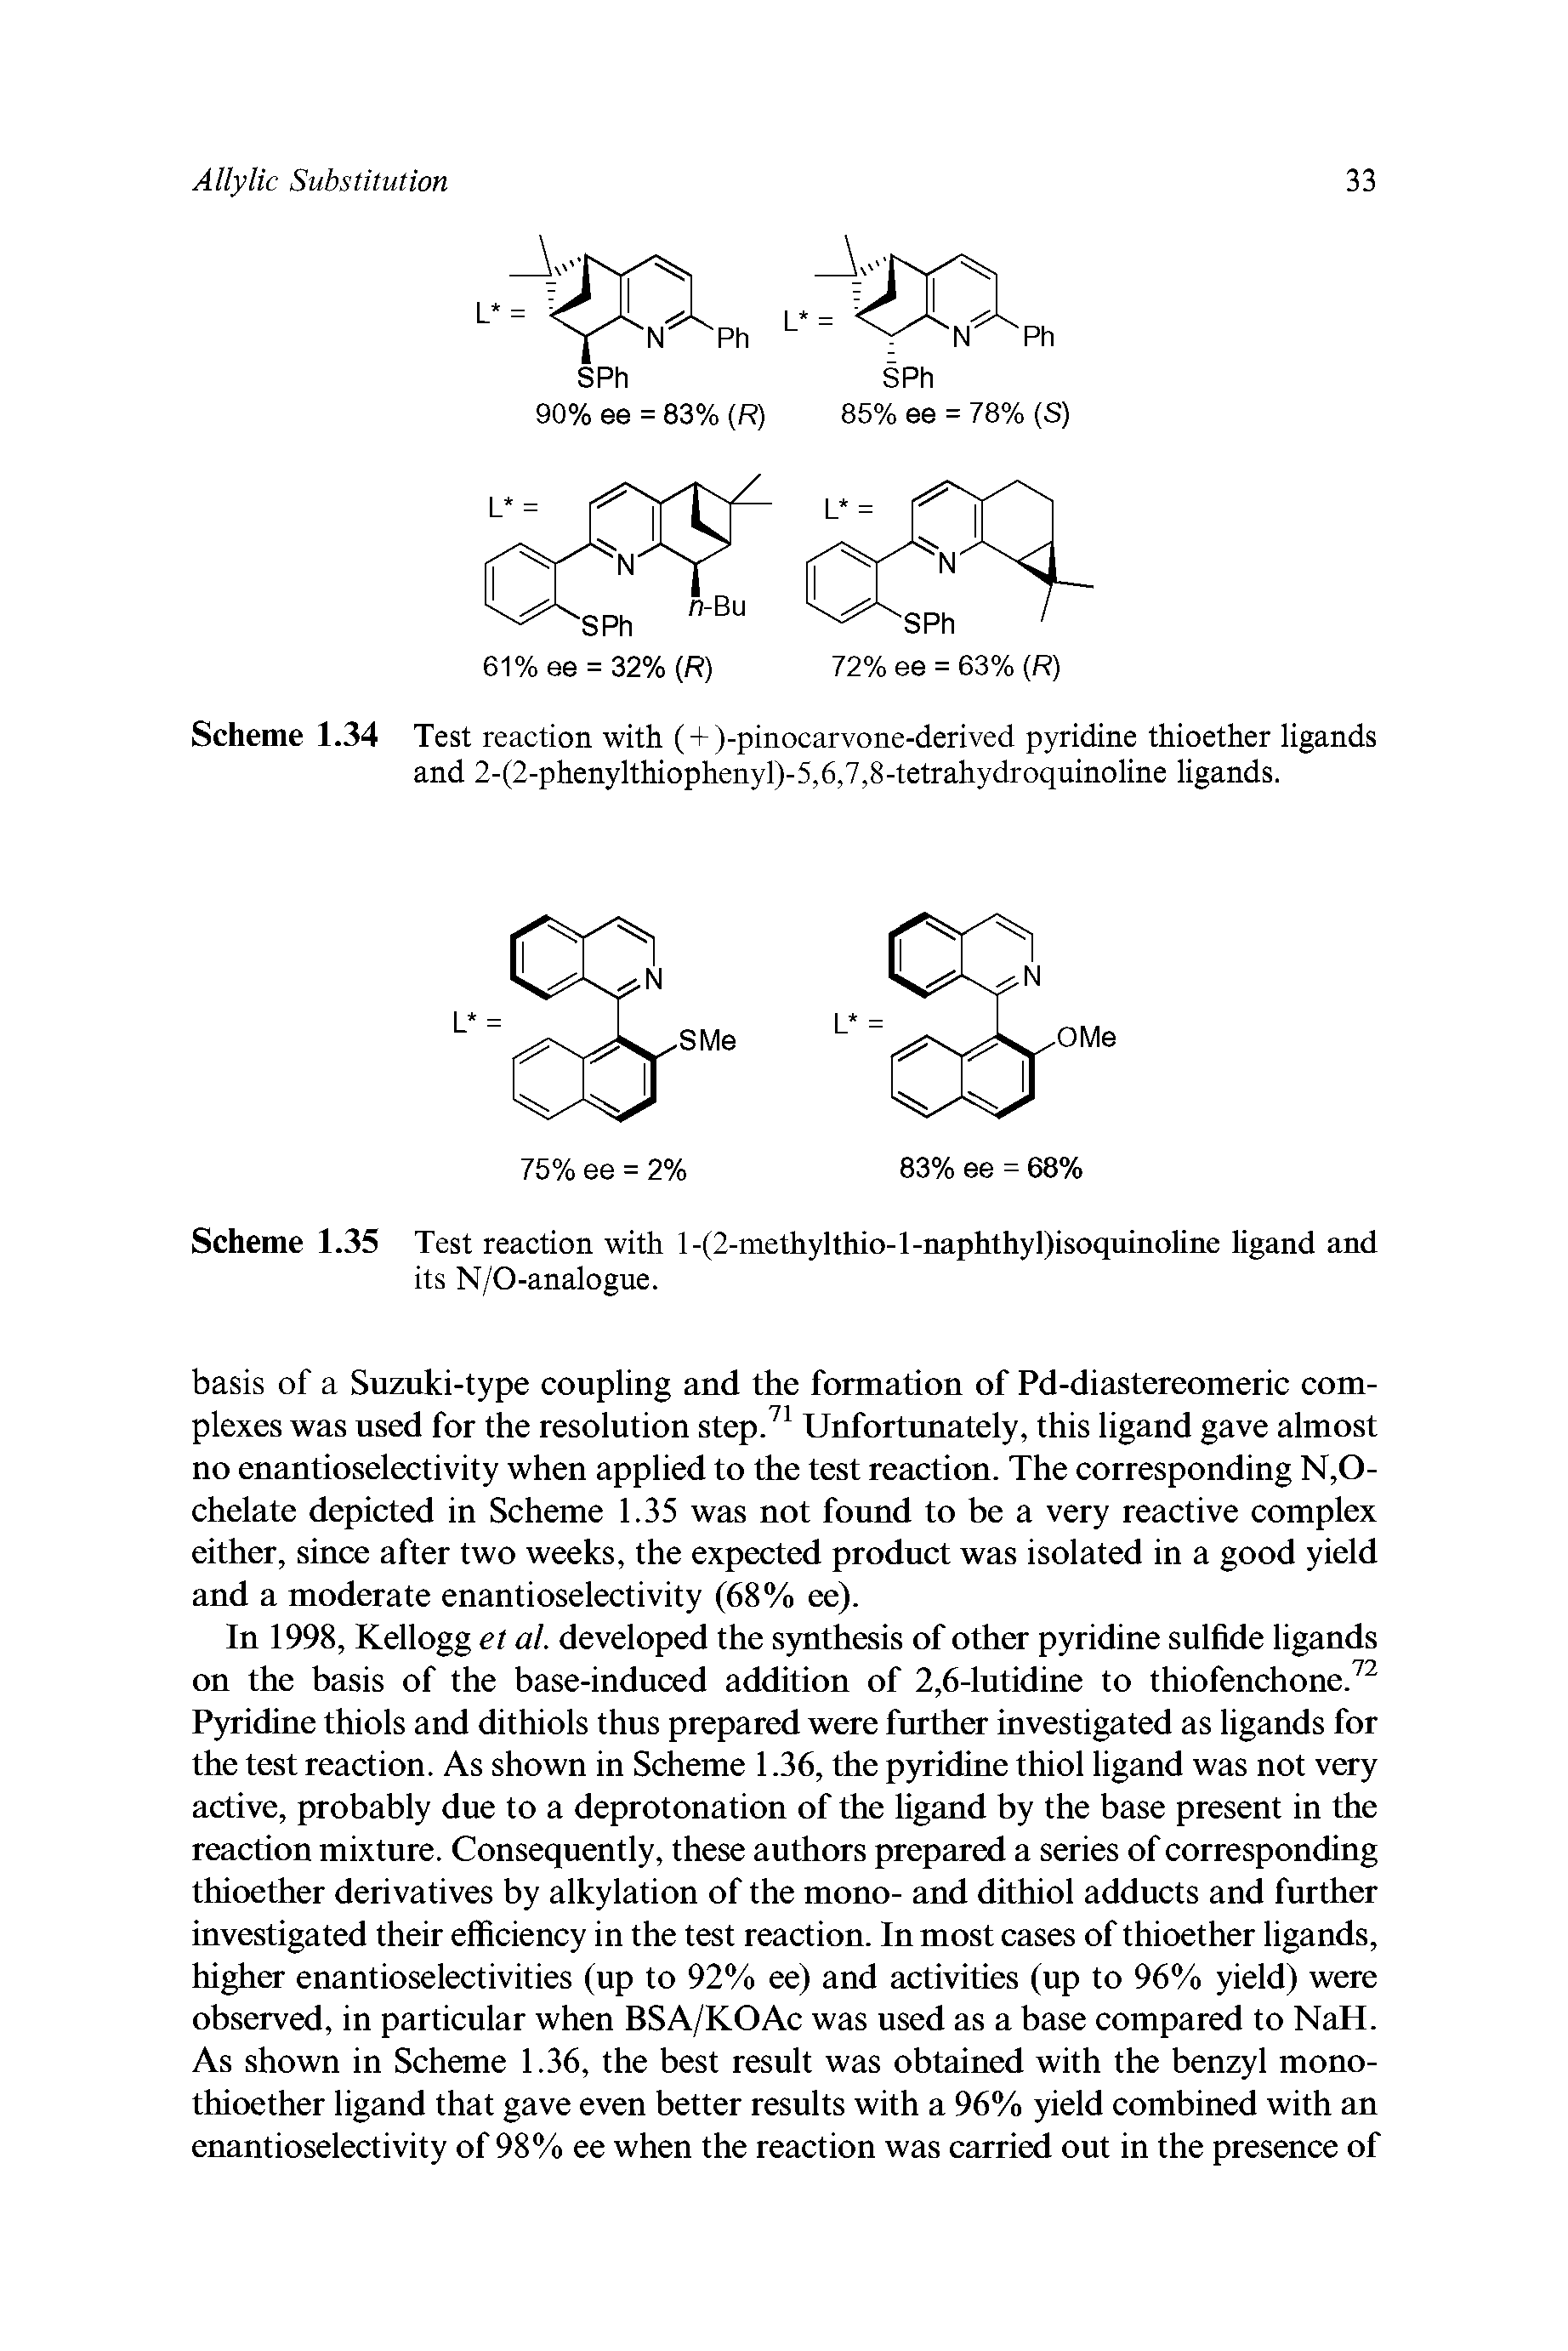 Scheme 1.34 Test reaction with (+ )-pinocarvone-derived pyridine thioether ligands and 2-(2-phenylthiophenyl)-5,6,7,8-tetrahydroquinoline ligands.